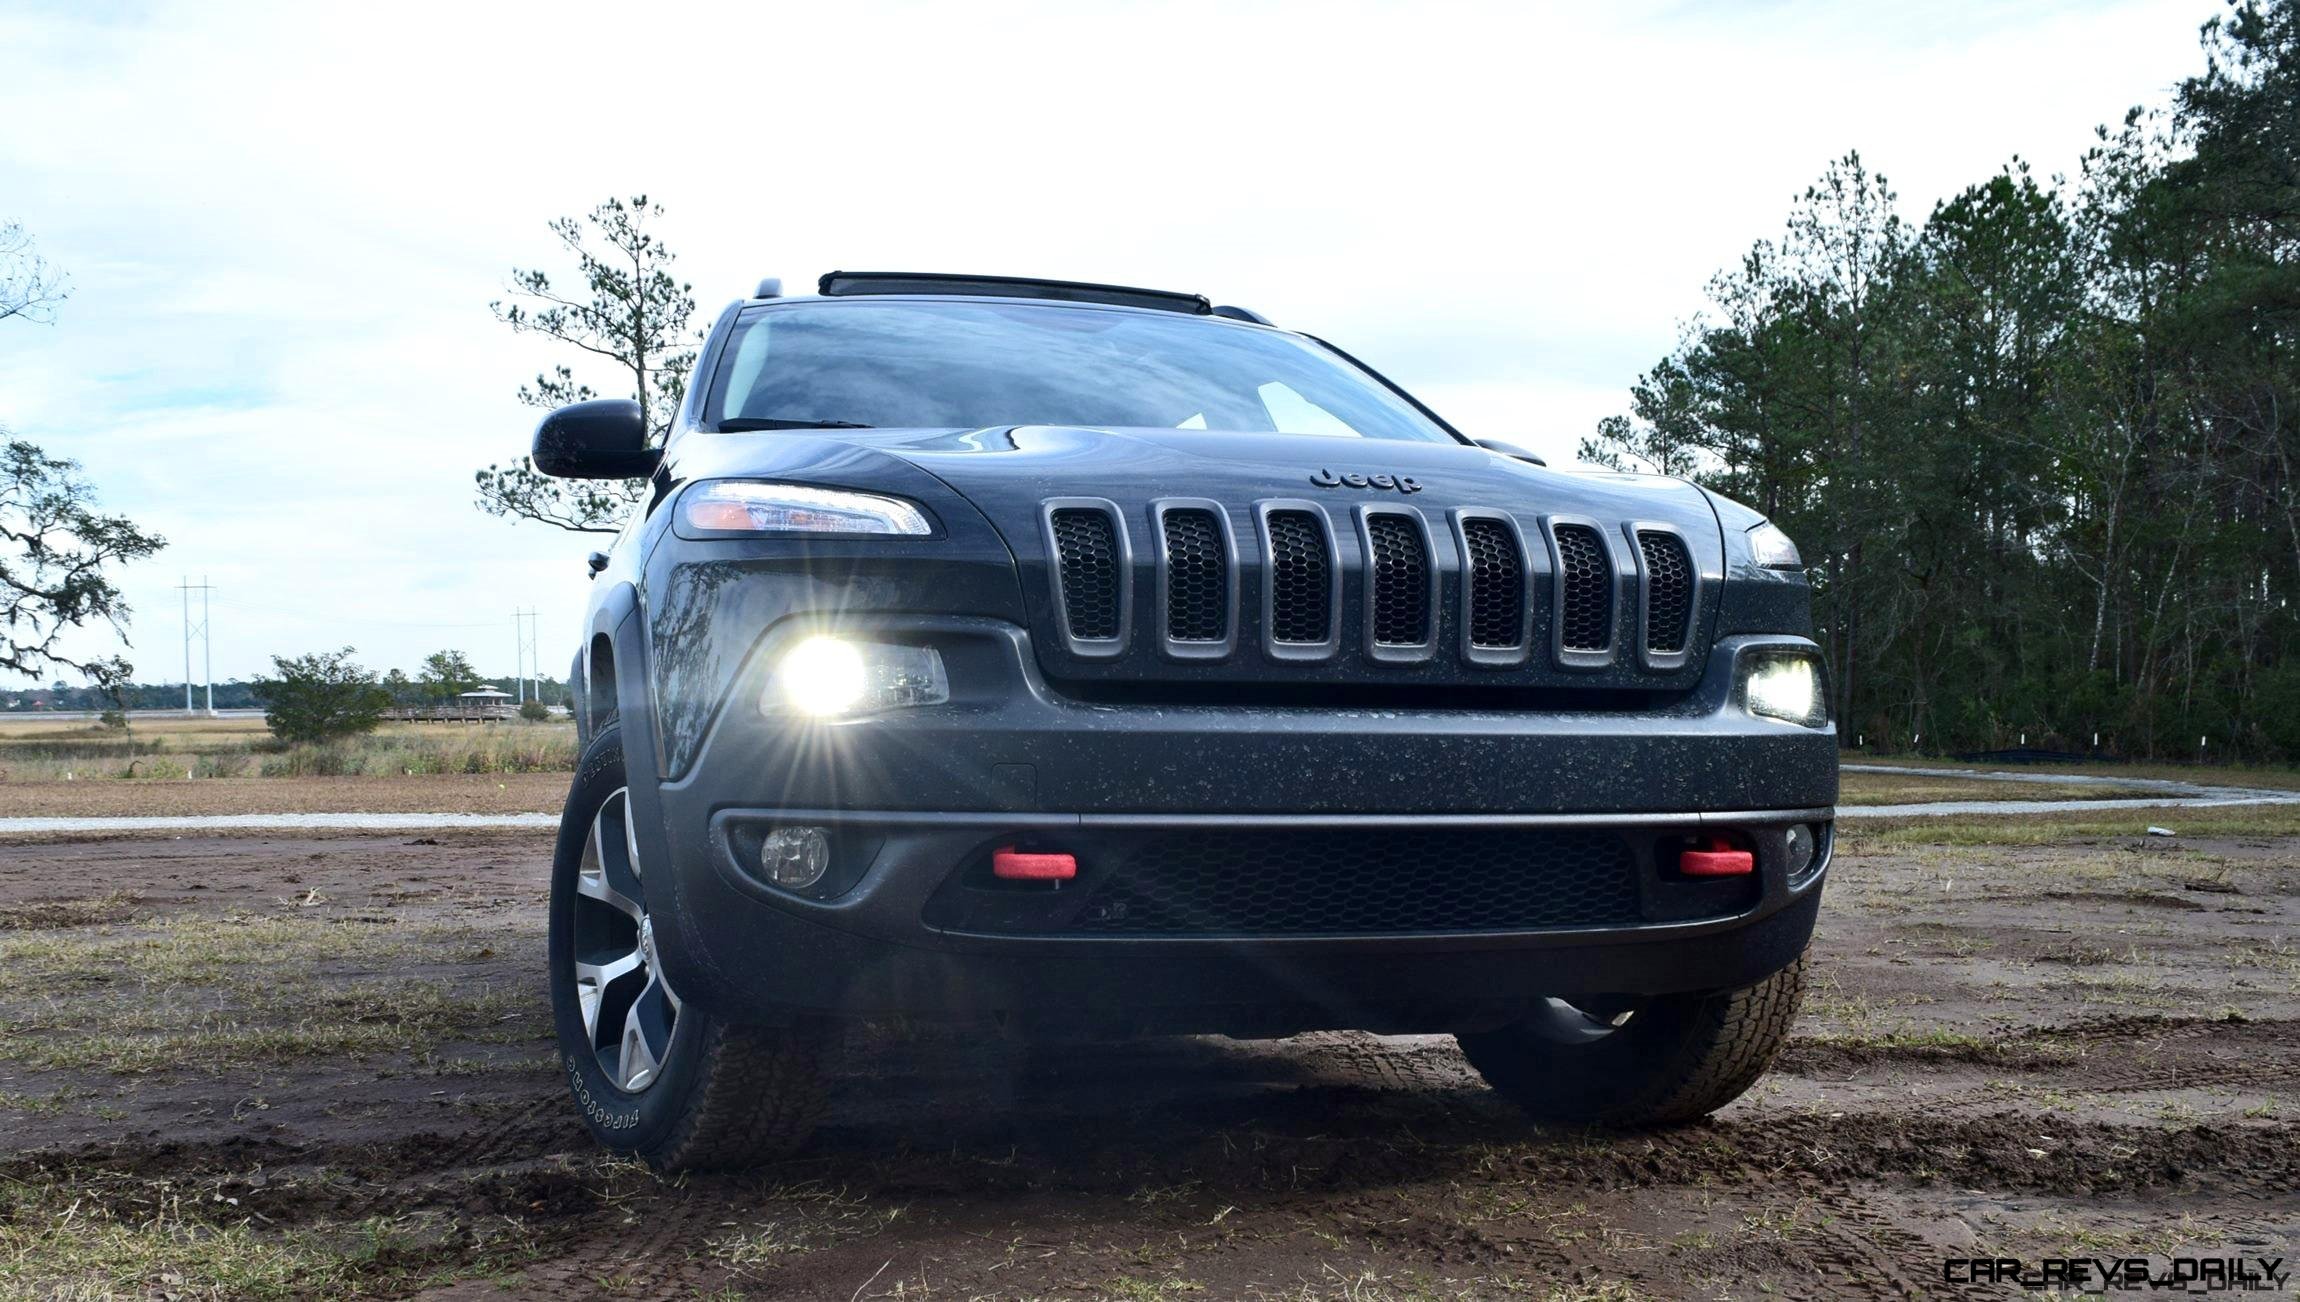 17 Jeep Cherokee Trailhawk Hd Road Test Review Plus 2 Videos Car Shopping Car Revs Daily Com